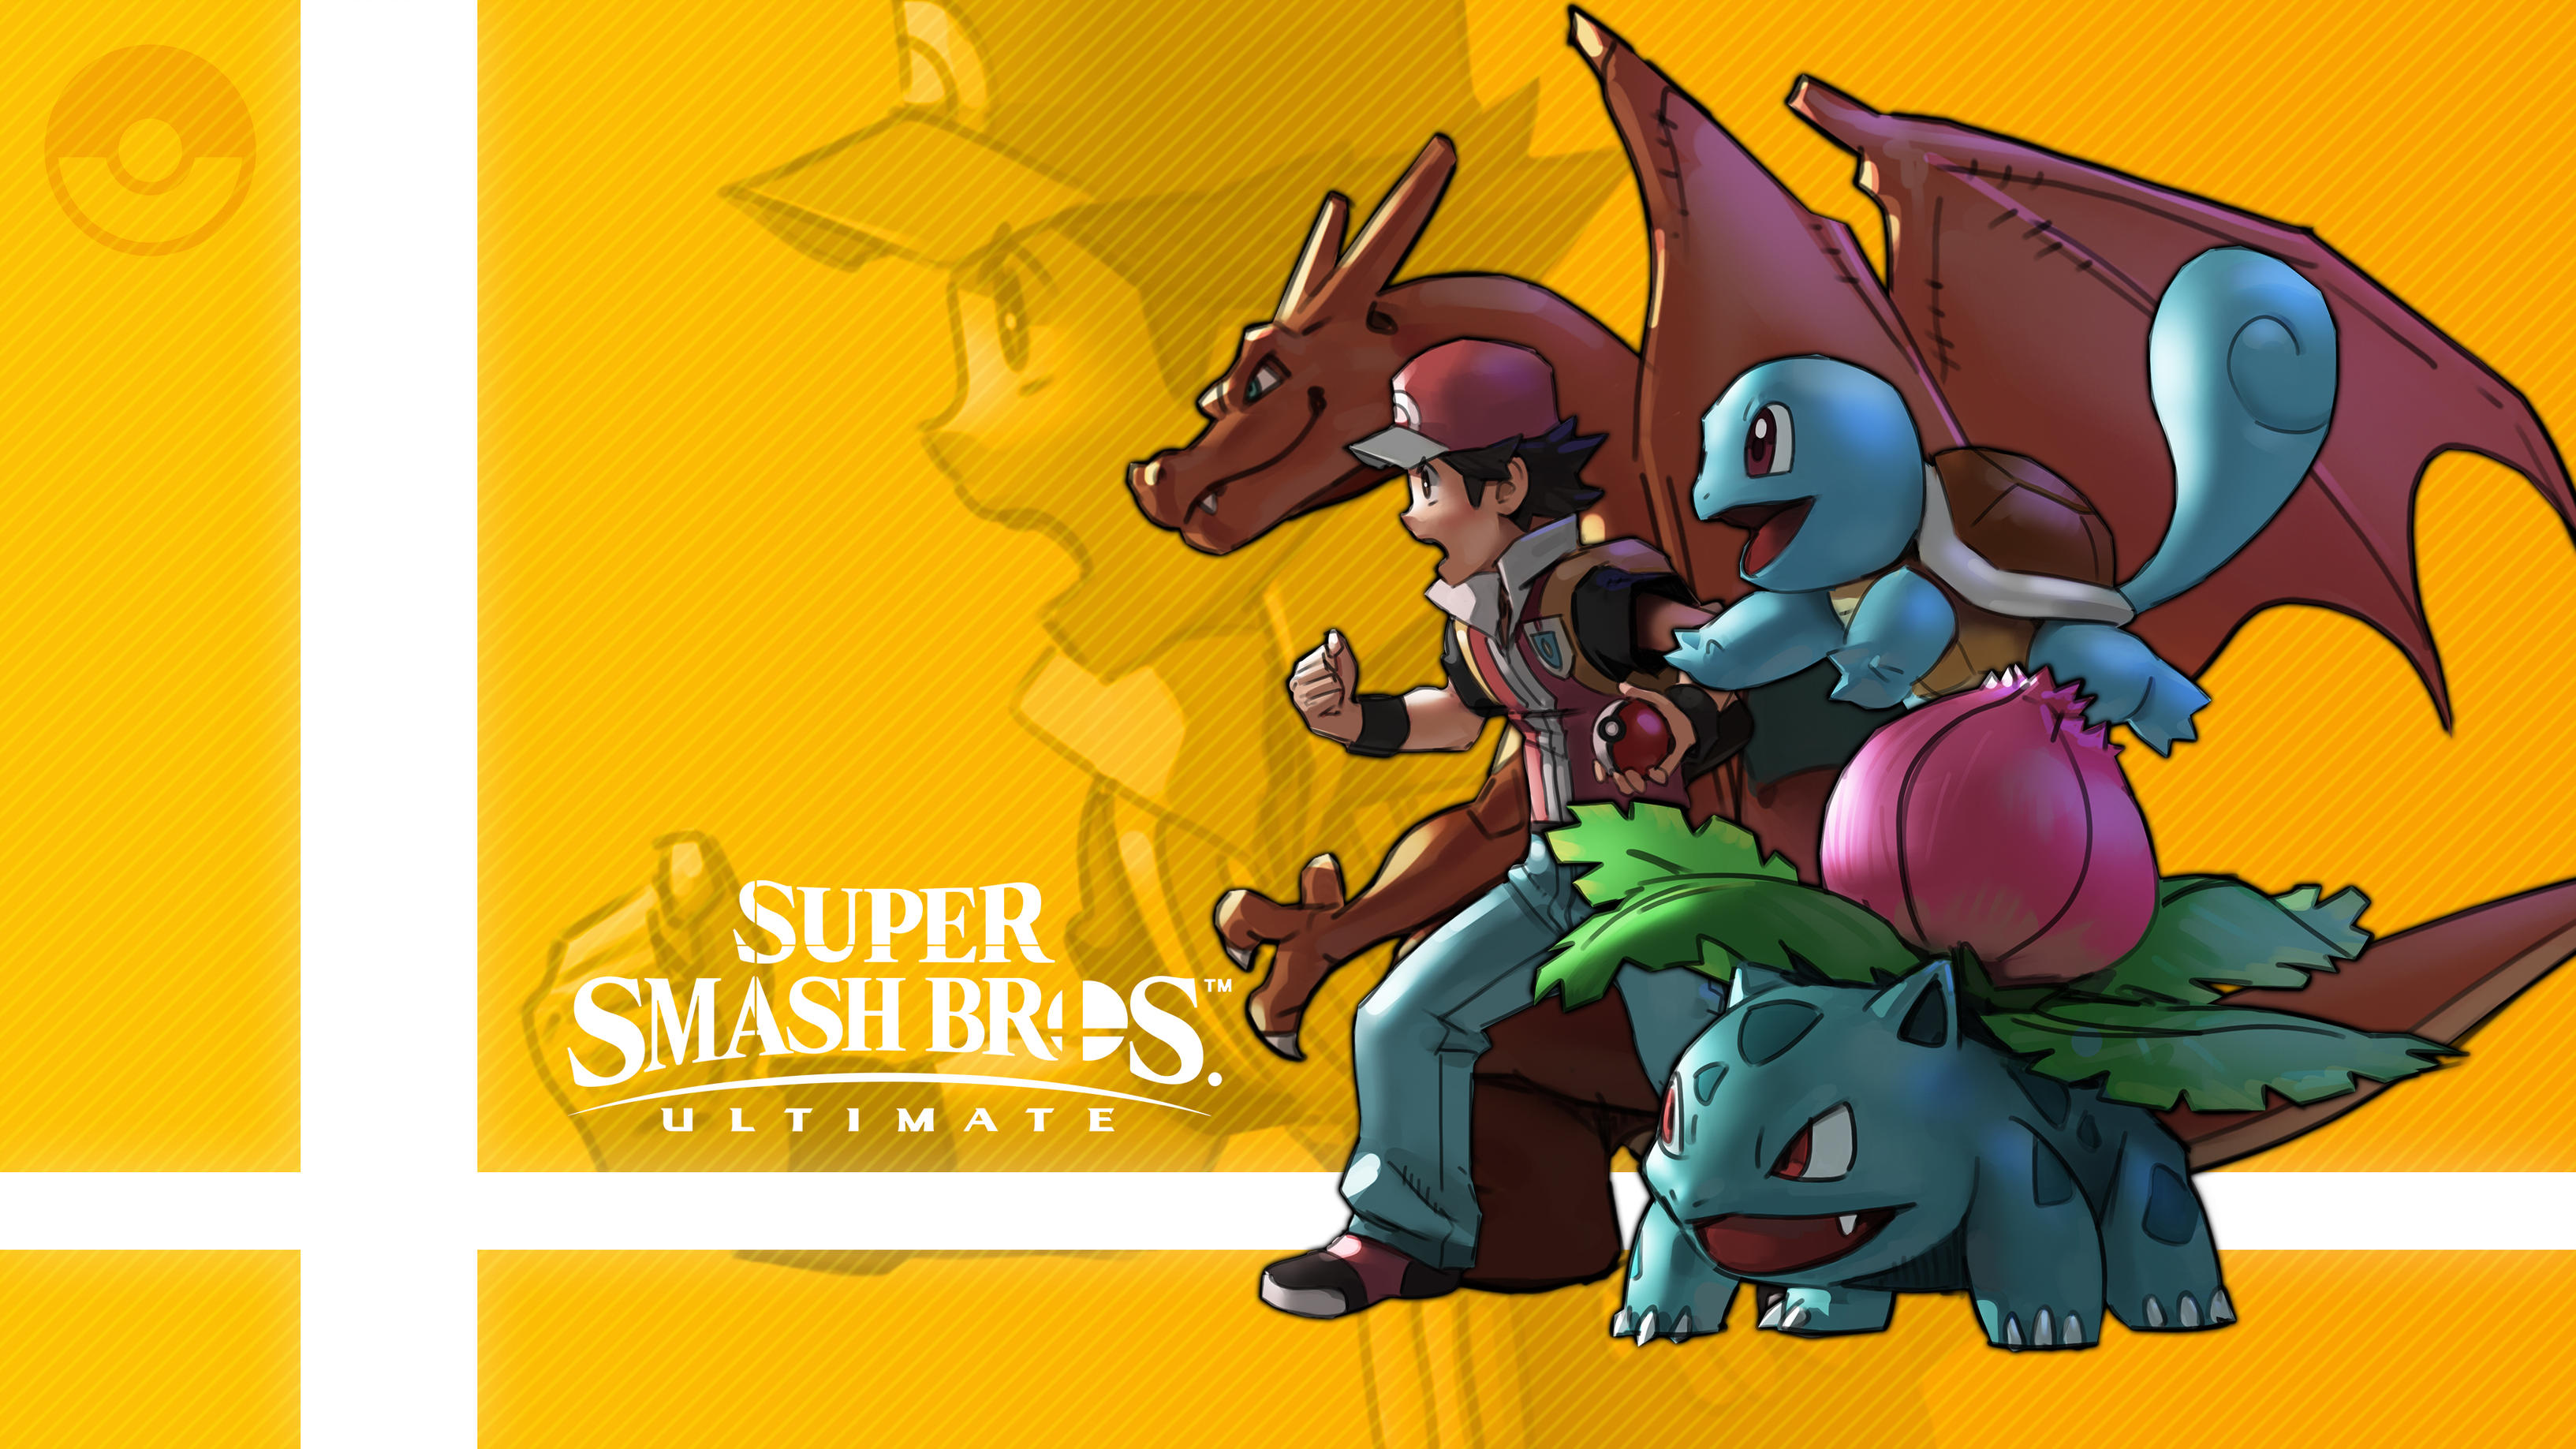 Charizard Pokemon Ivysaur Pokemon Pokemon Trainer Squirtle Pokemon Super Smash Bros Ultimate 3266x1837